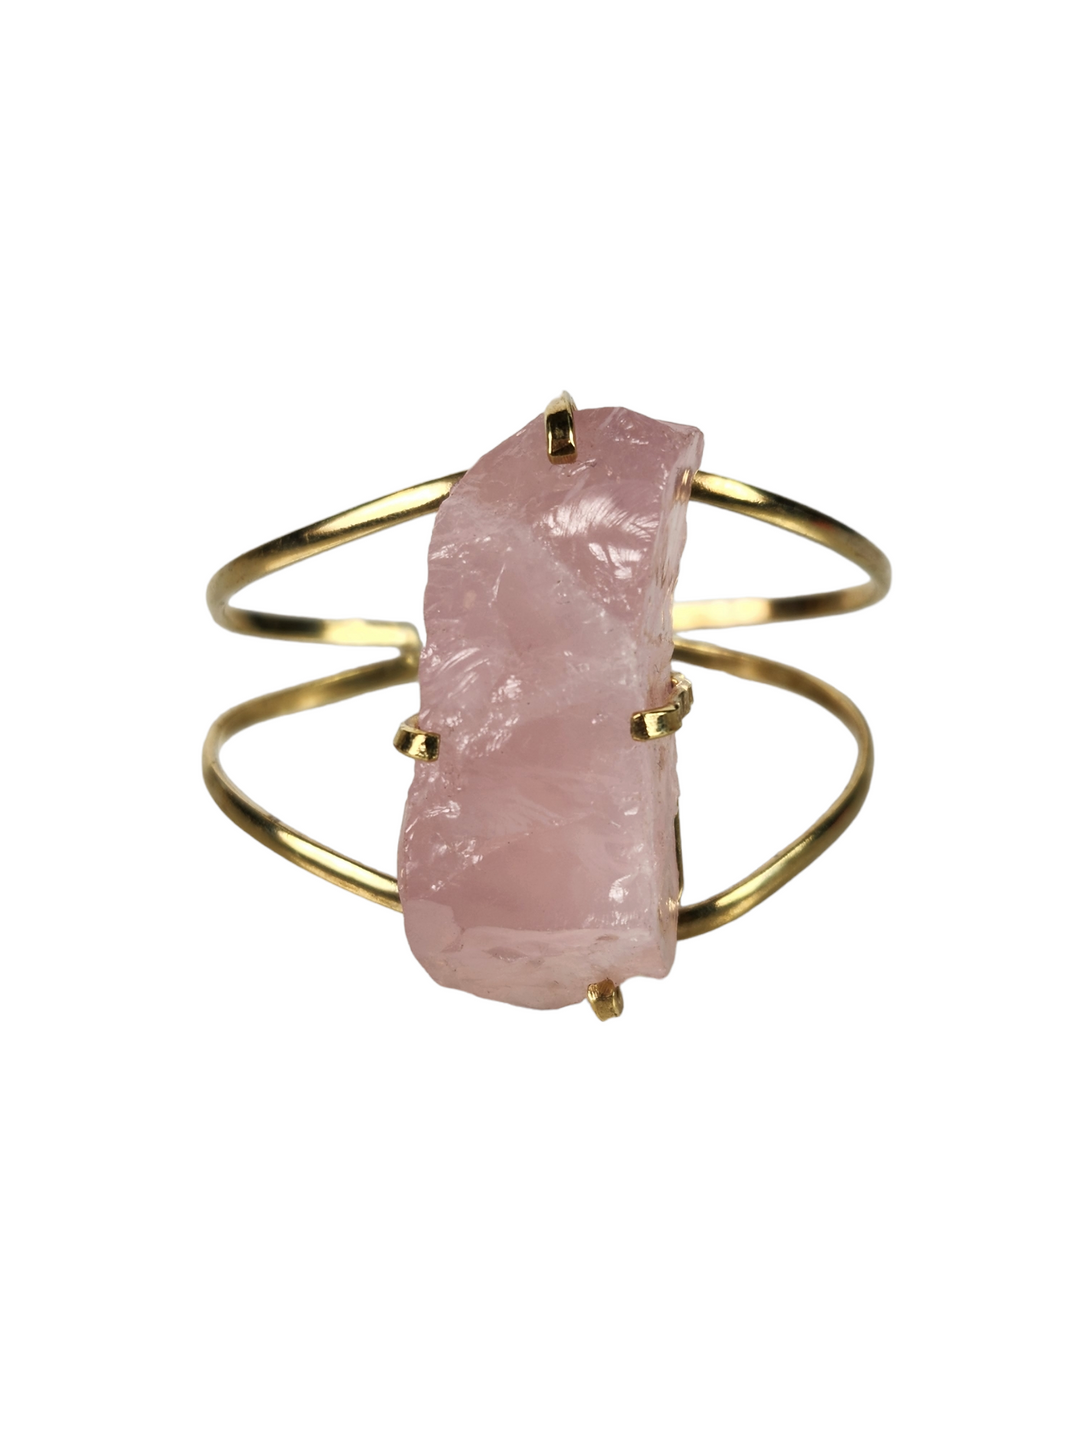 The Valor Pink Quartz Cuff Bracelet